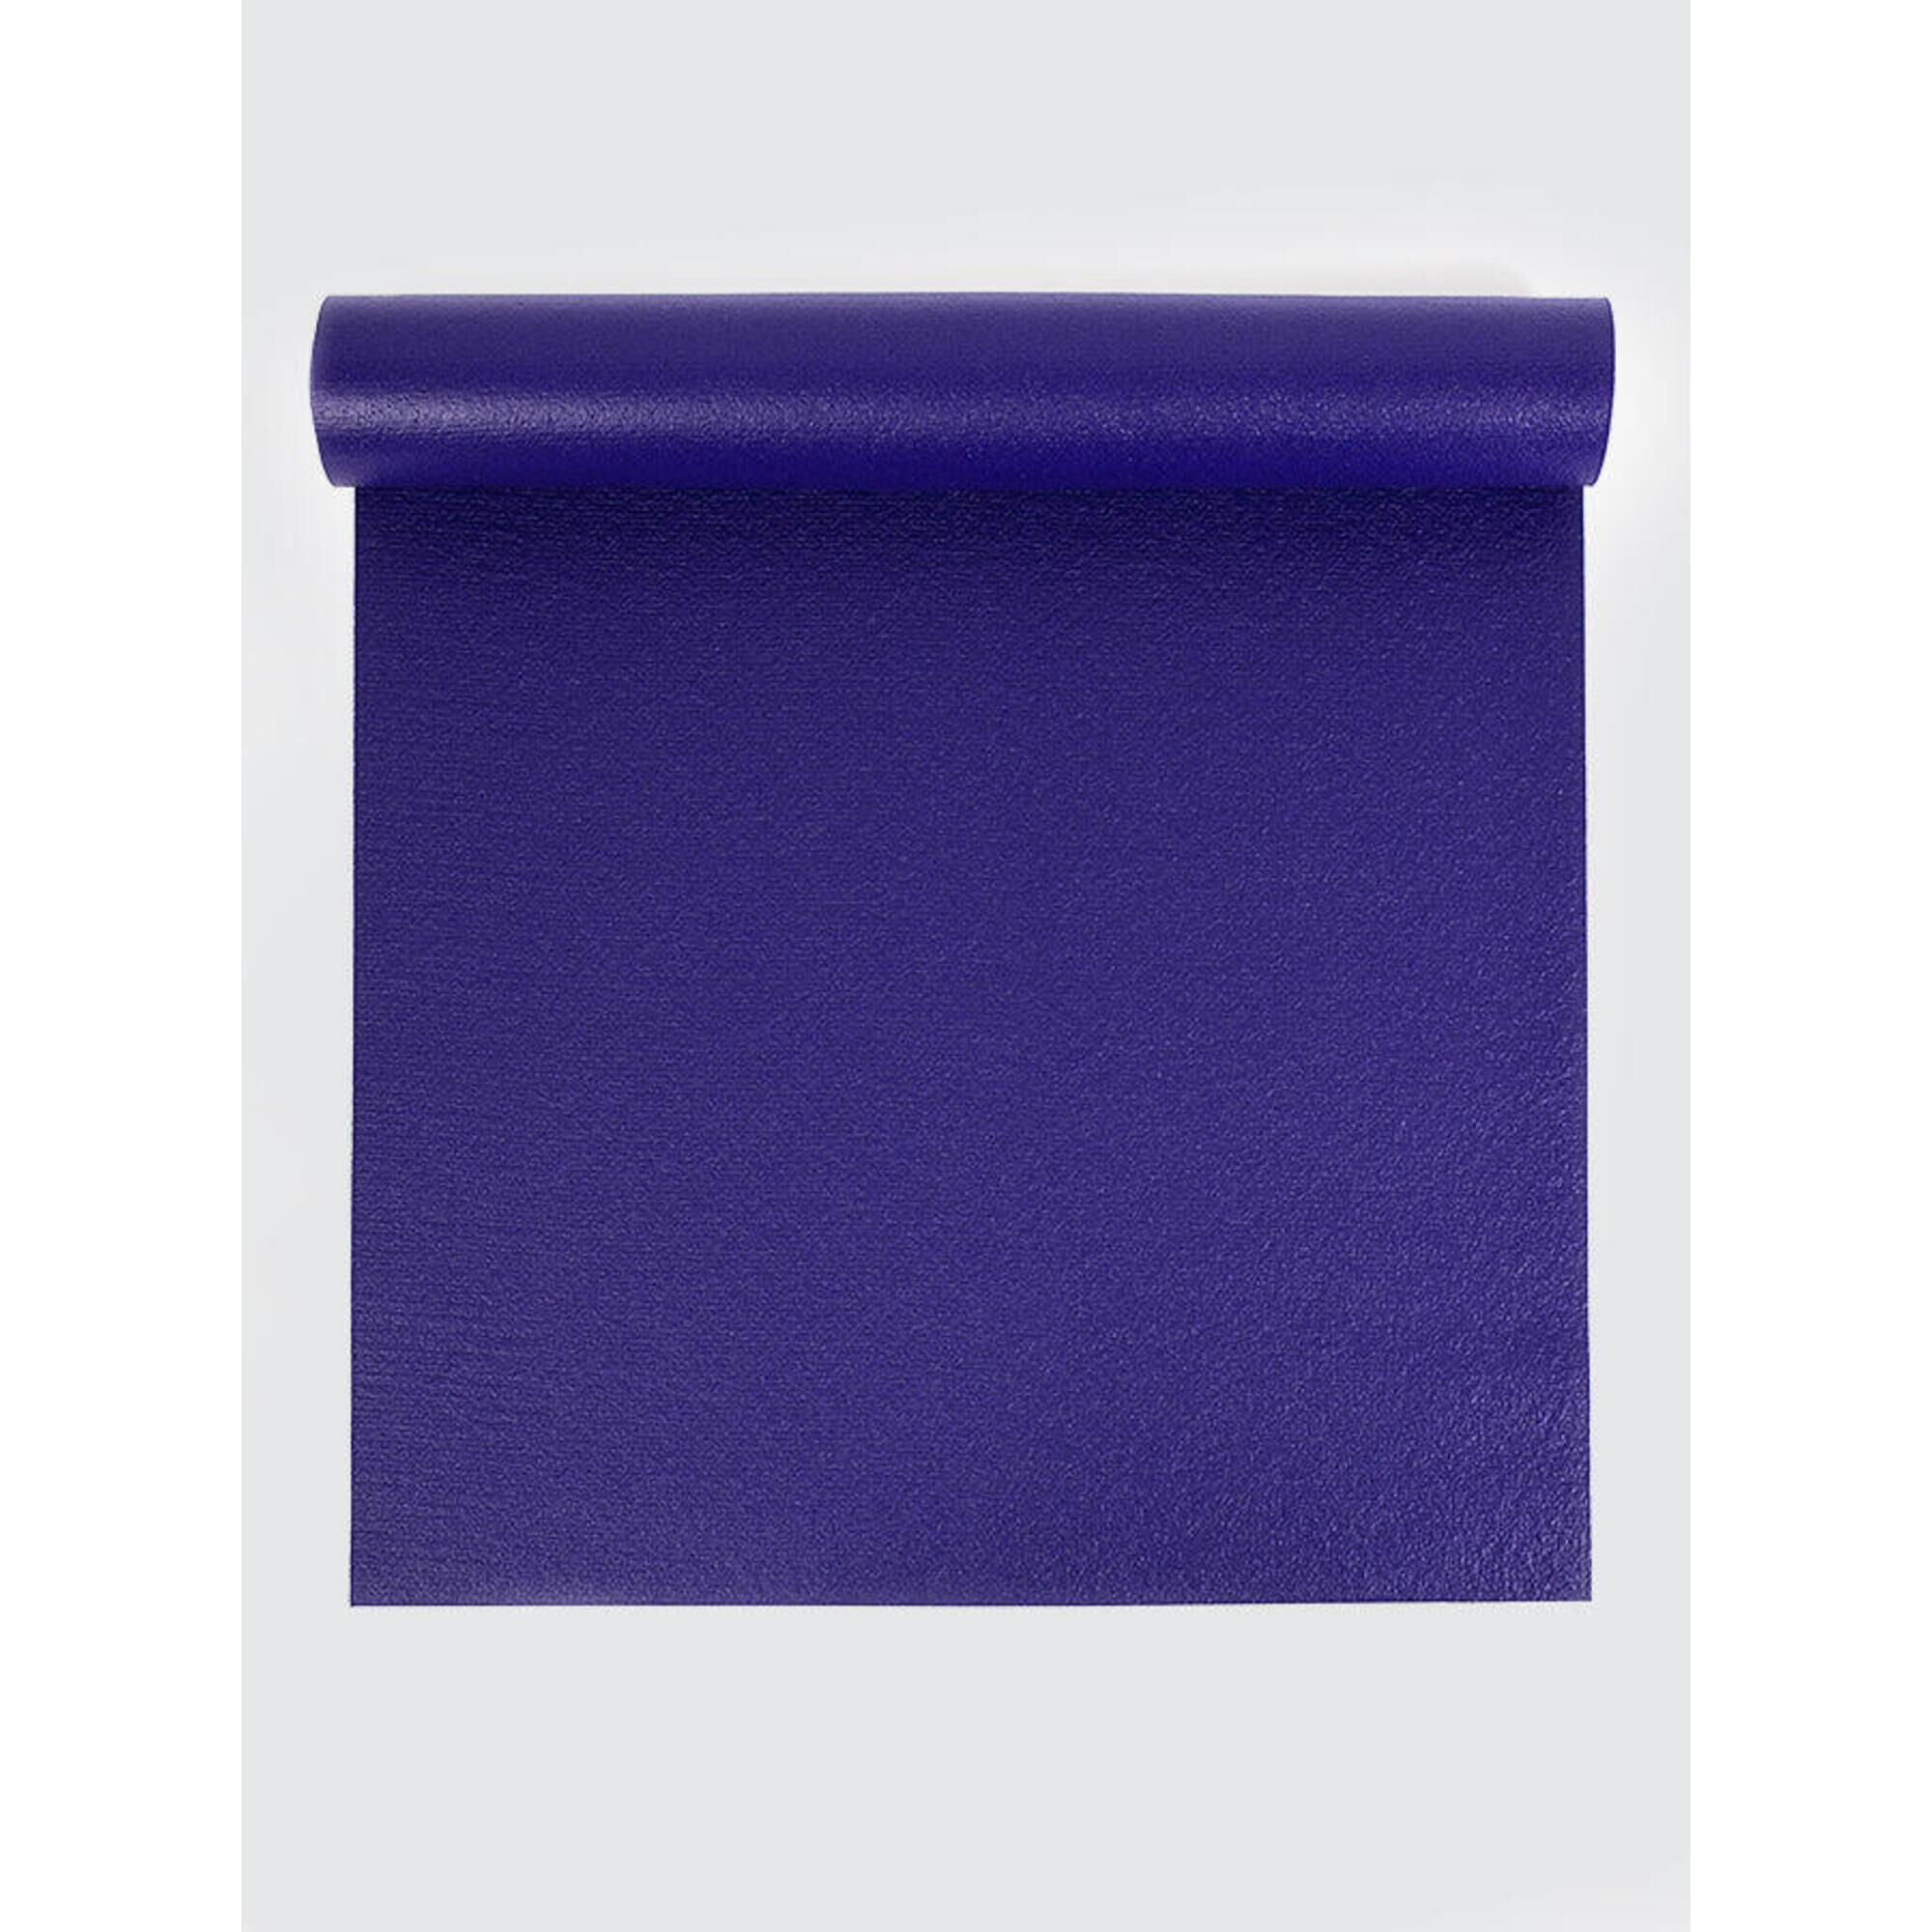 YOGA STUDIO Yoga Studio Oeko-Tex Long & Wide Yoga Mat 4.5mm - Purple Grape